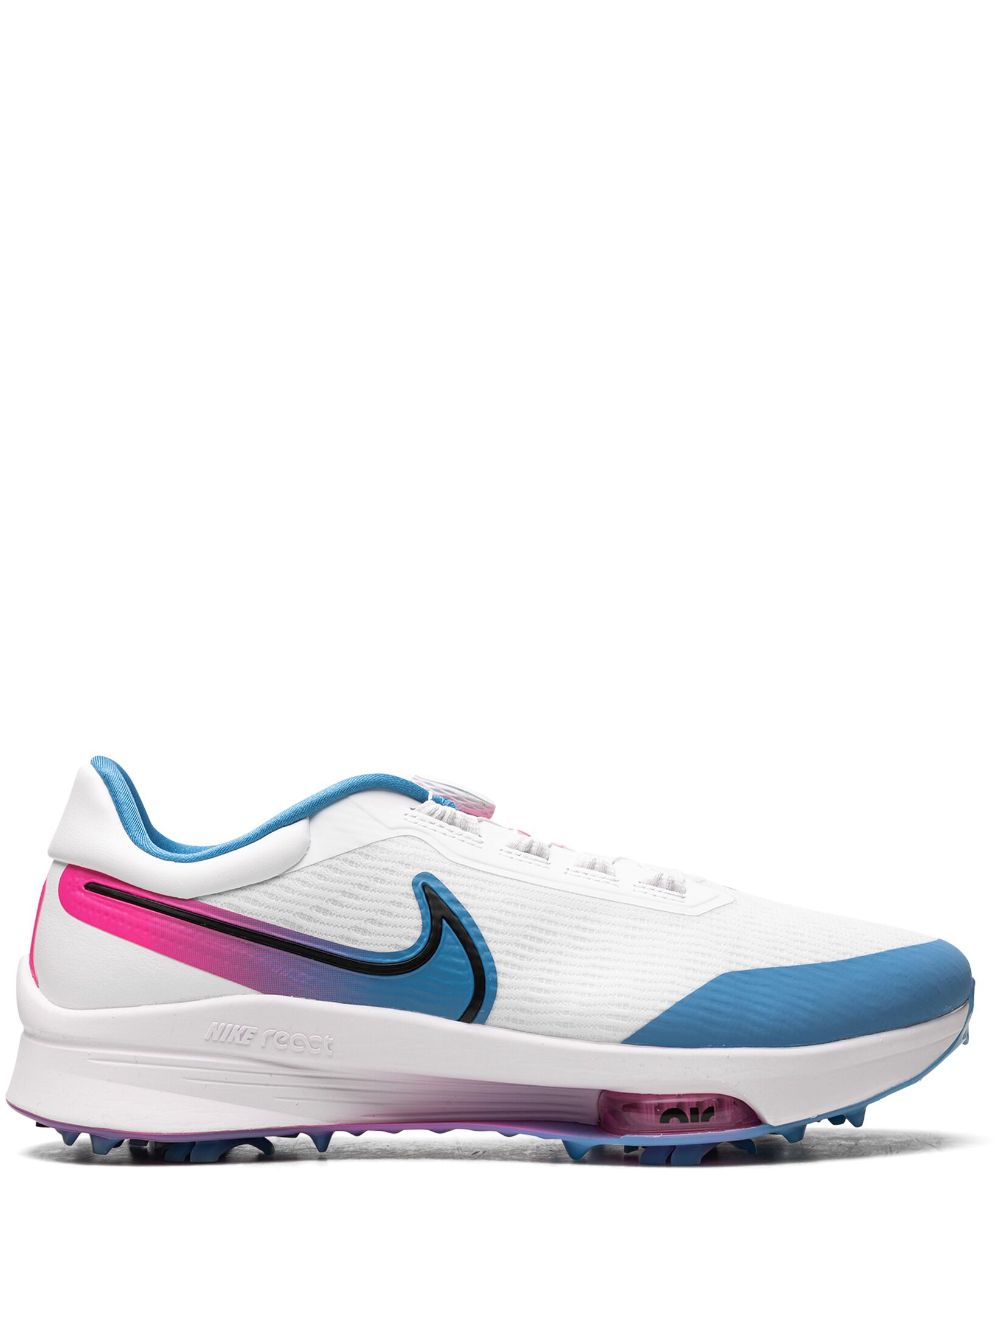 Nike Air Zoom Infinity Tour NEXT% Boa Wide "White/Aurora Blue/Pink Blast" sneakers von Nike